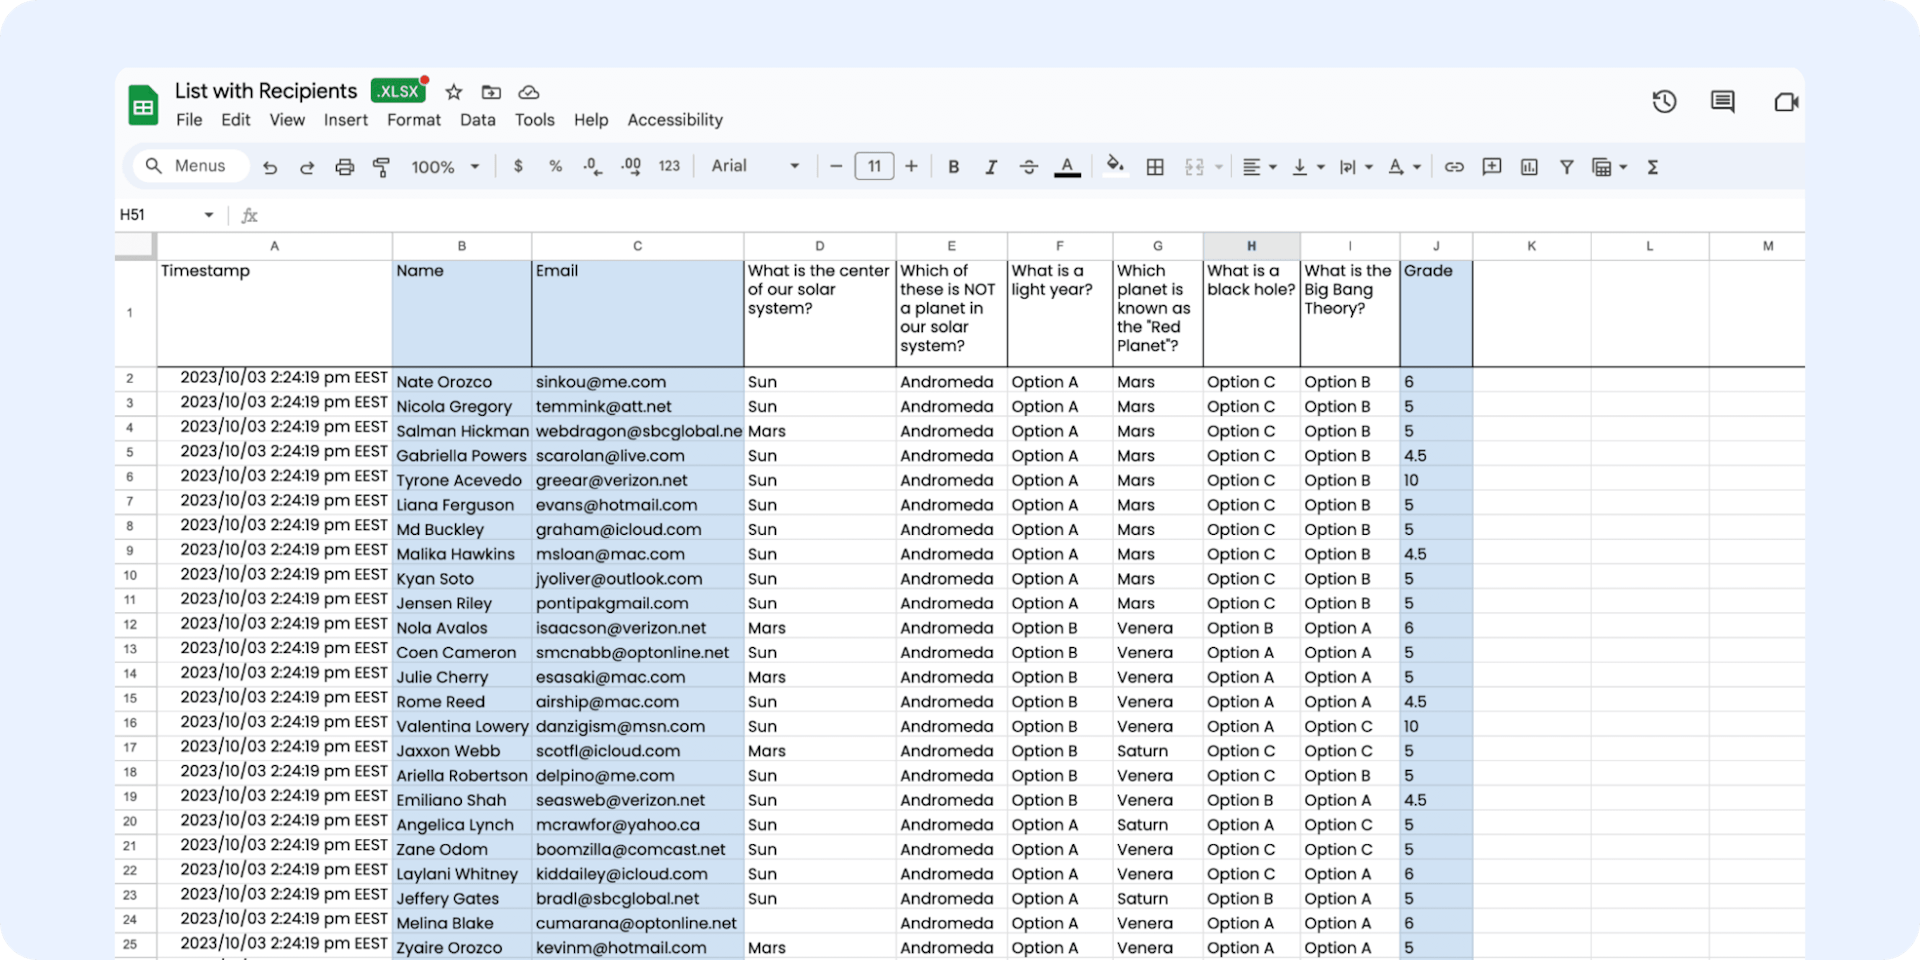 Preparing the spreadsheet data to generate certificates.